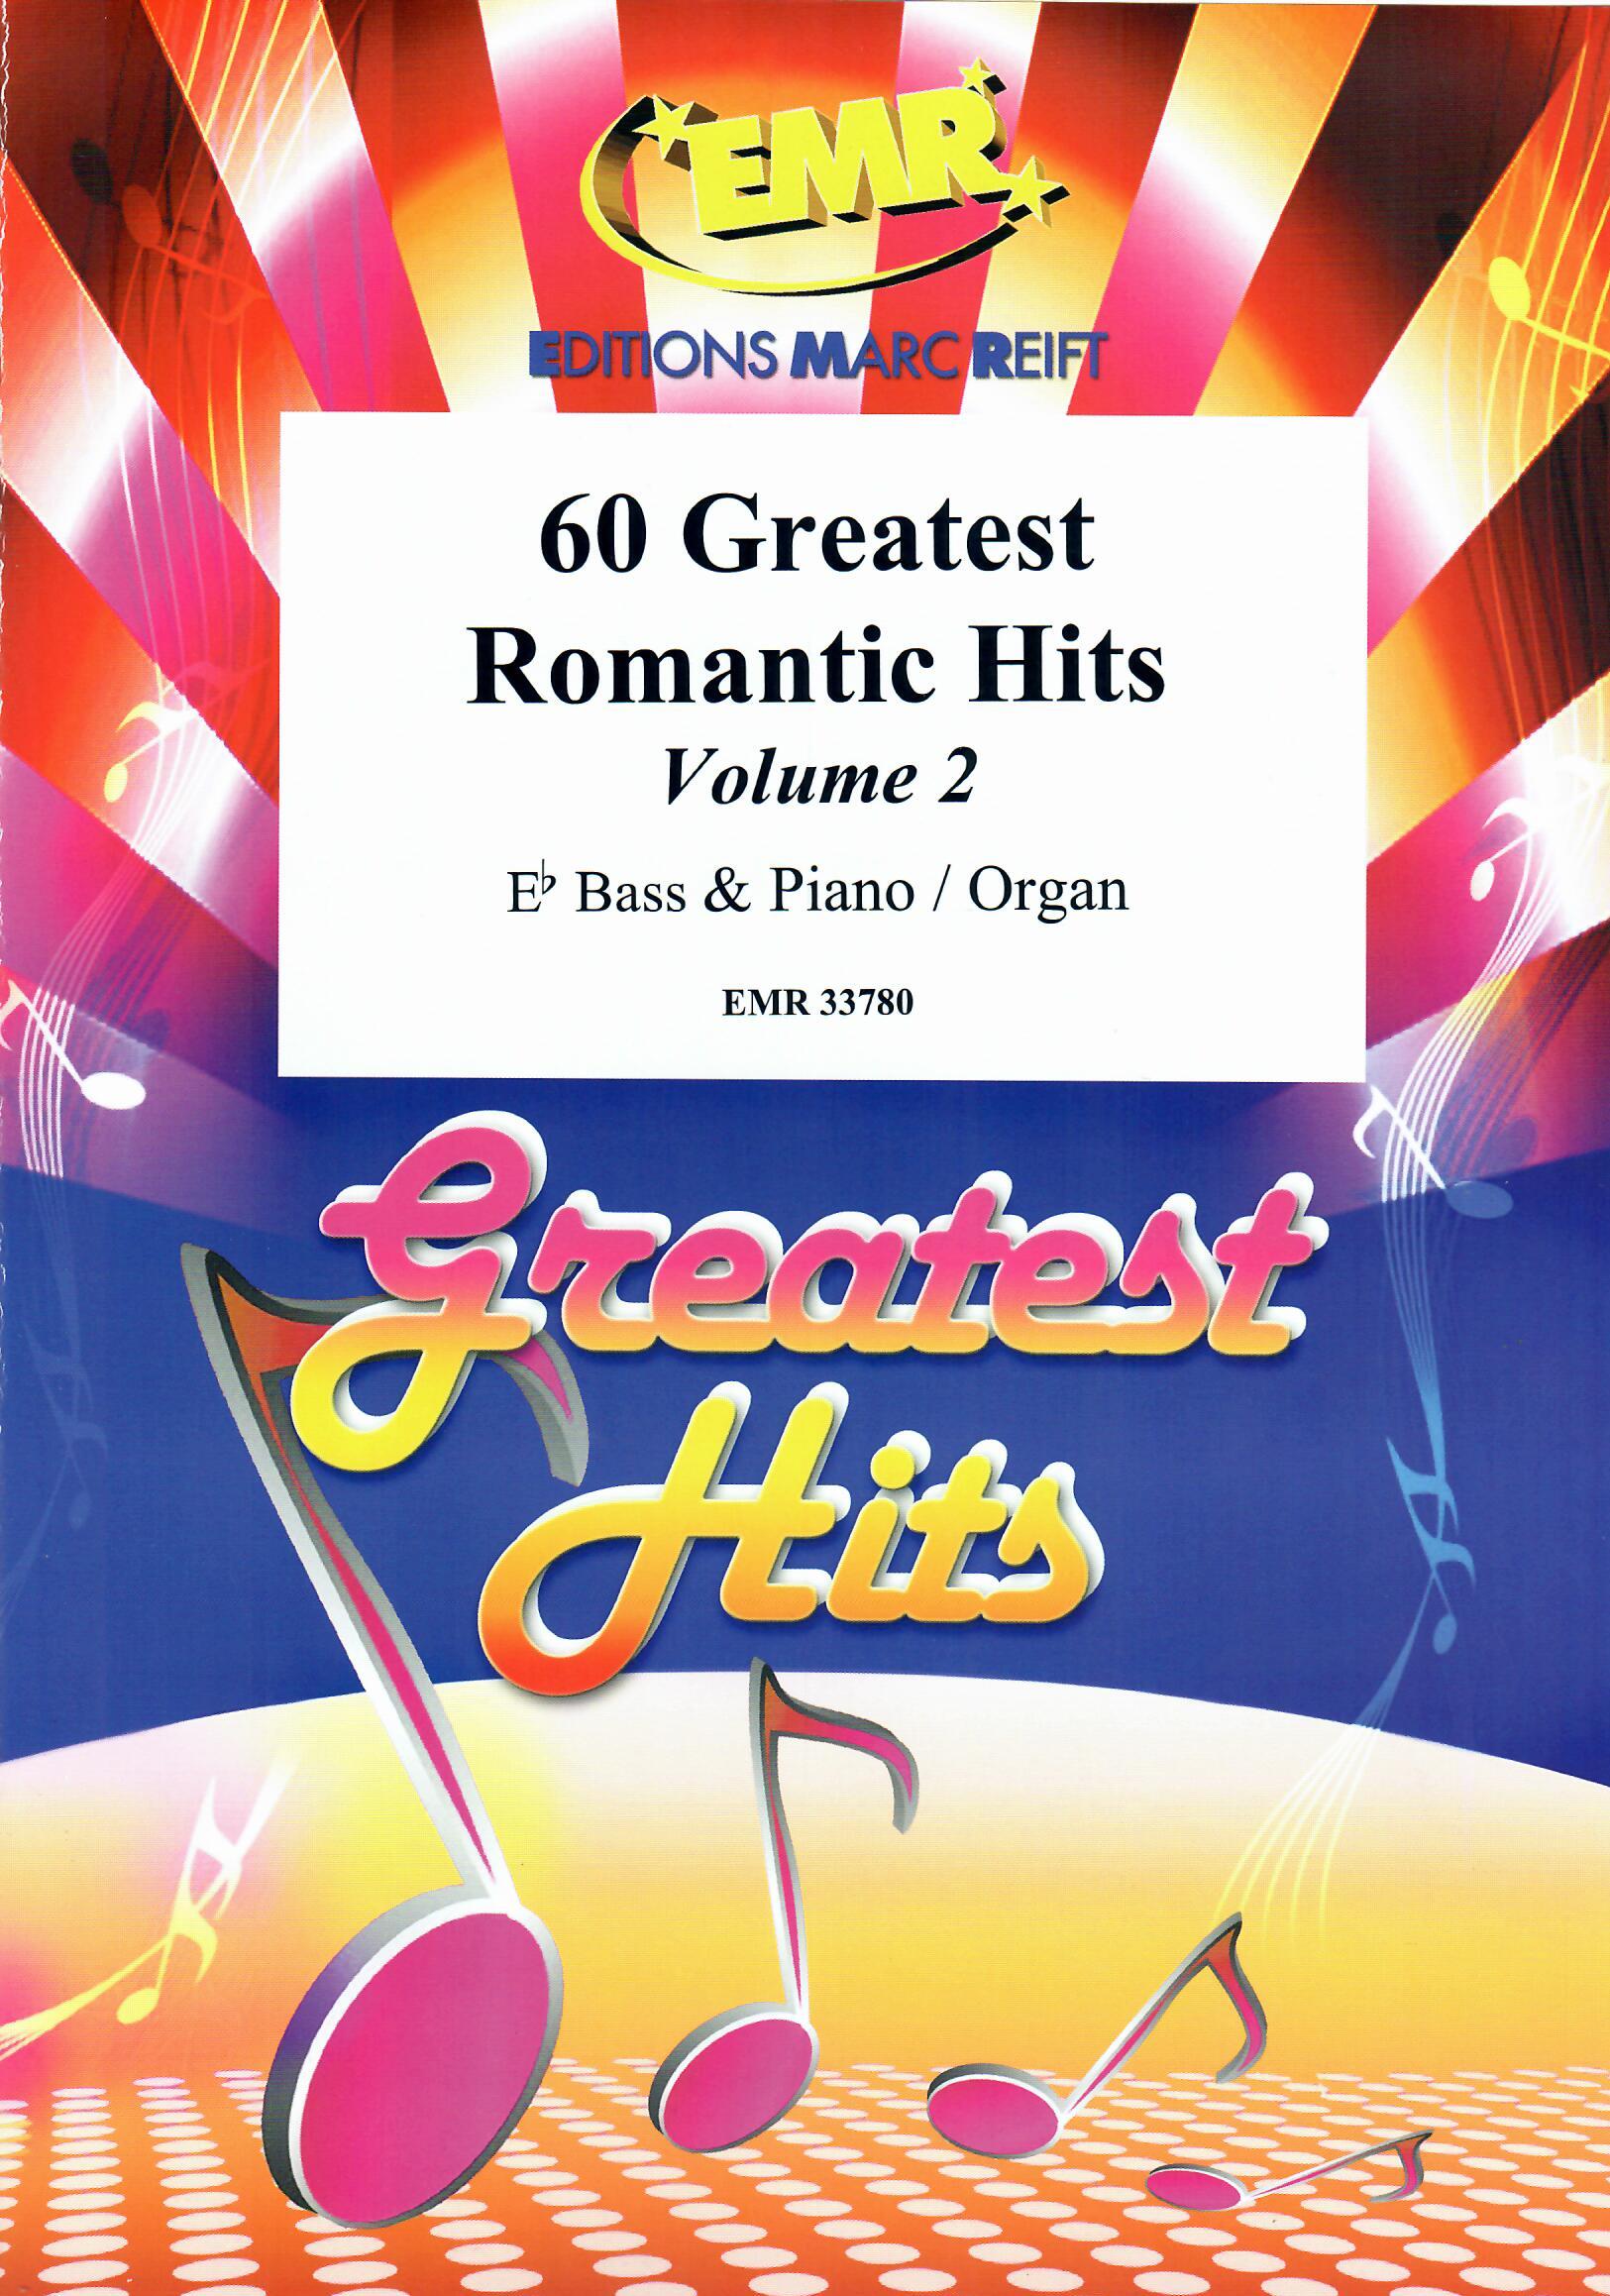 60 GREATEST ROMANTIC HITS VOLUME 2, SOLOS - E♭. Bass